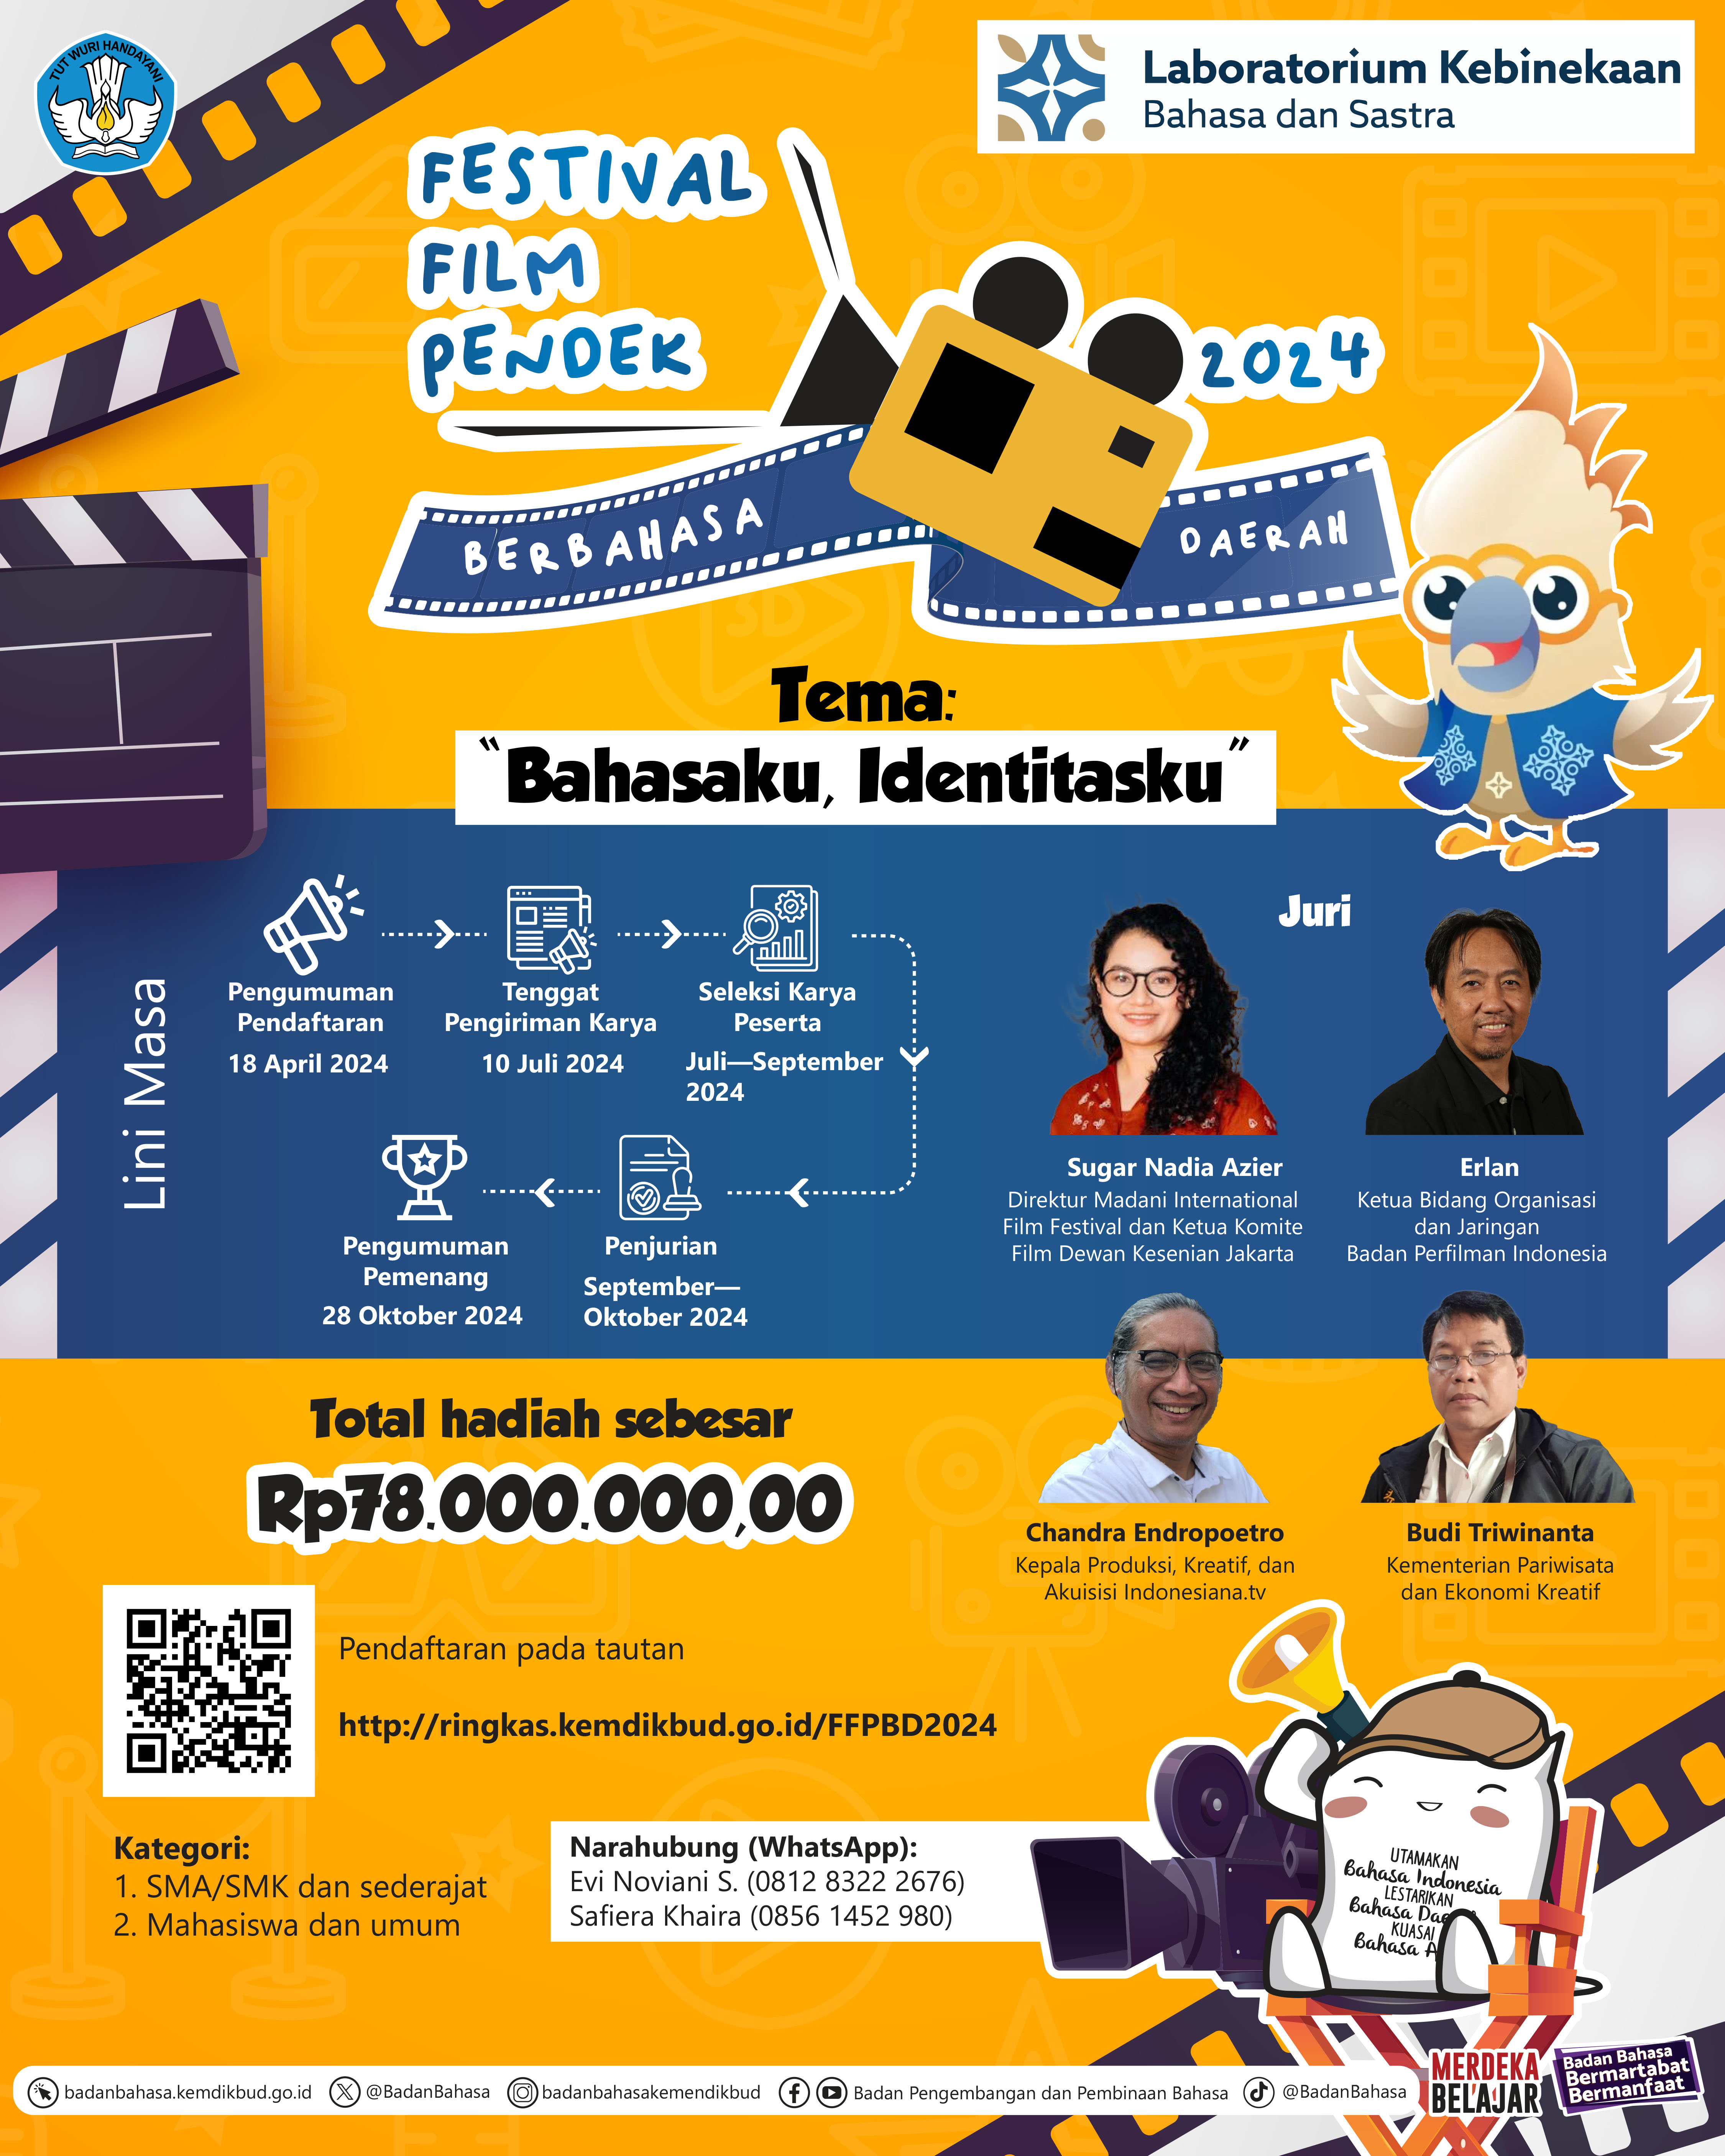 Festival Film Pendek Berbahasa Daerah 2024 " Bahasaku, Identitasku"